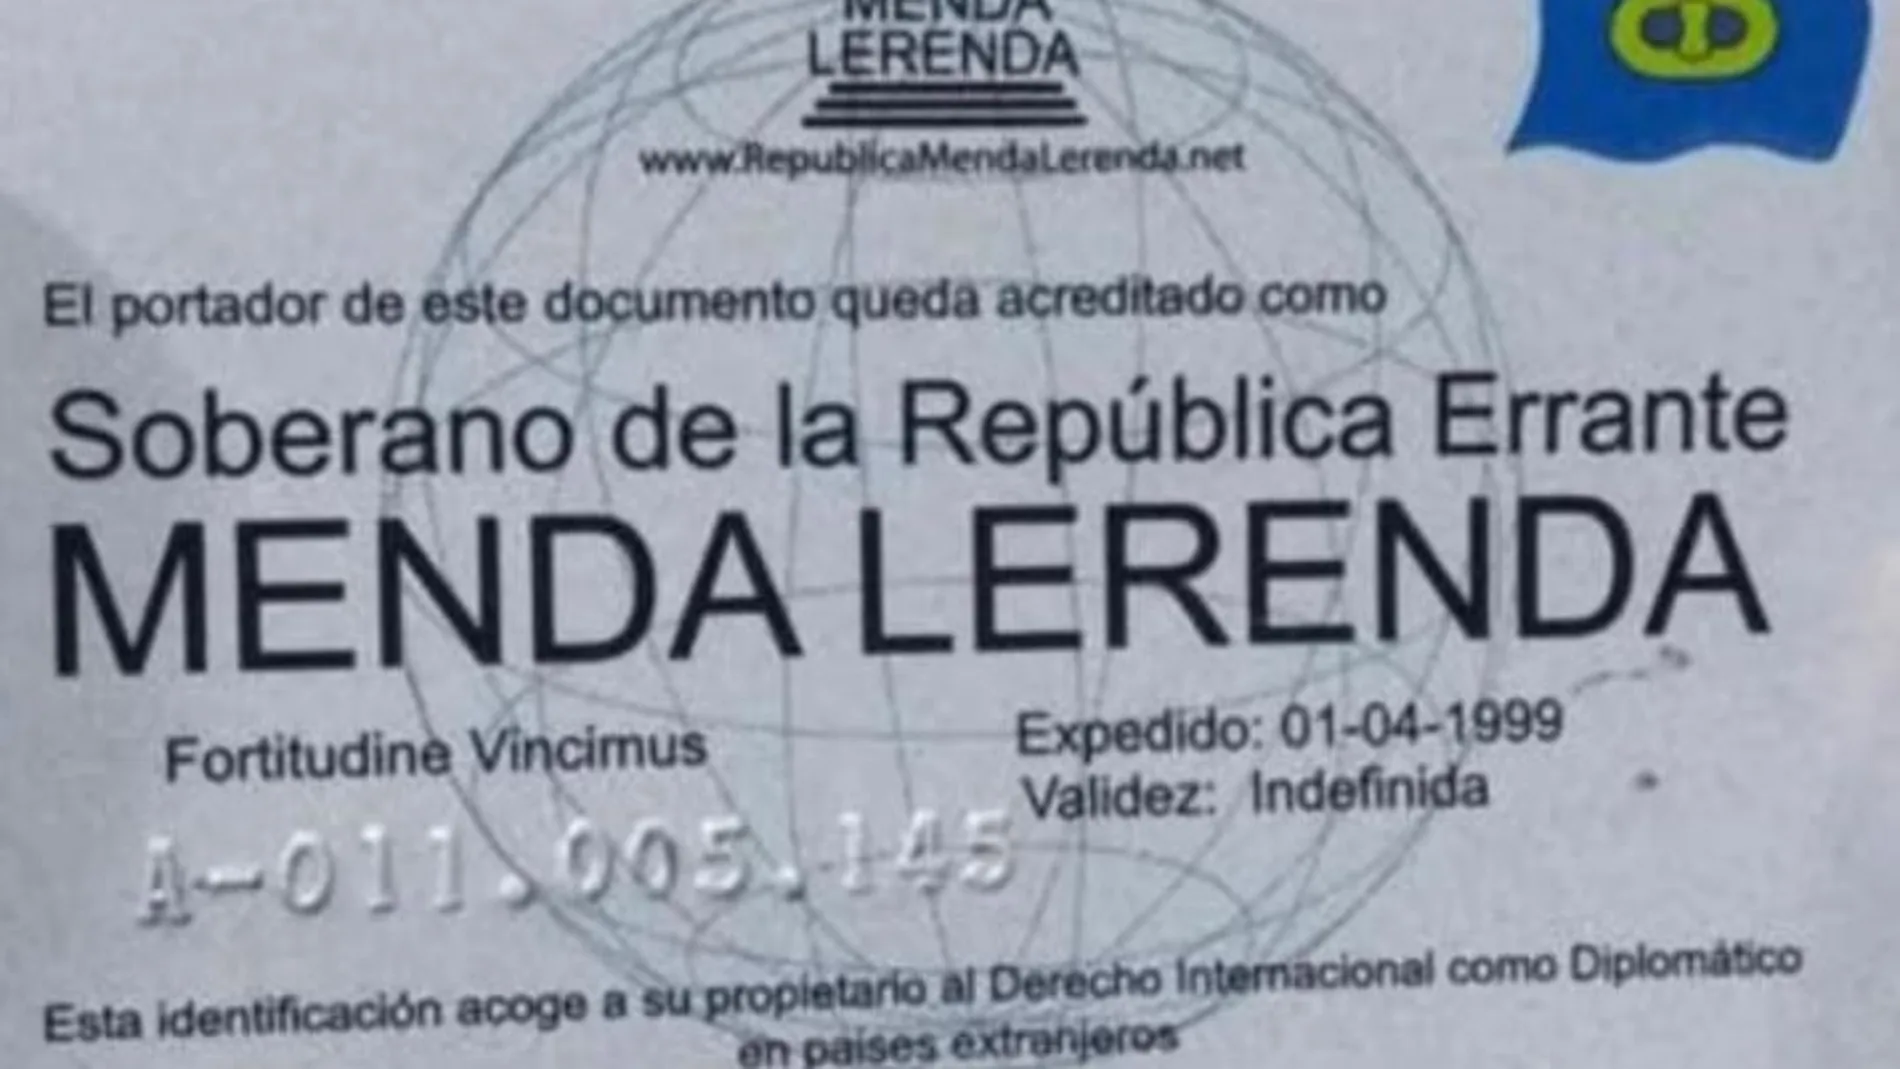 Carnet de la "República Errante Menda Lerenda"